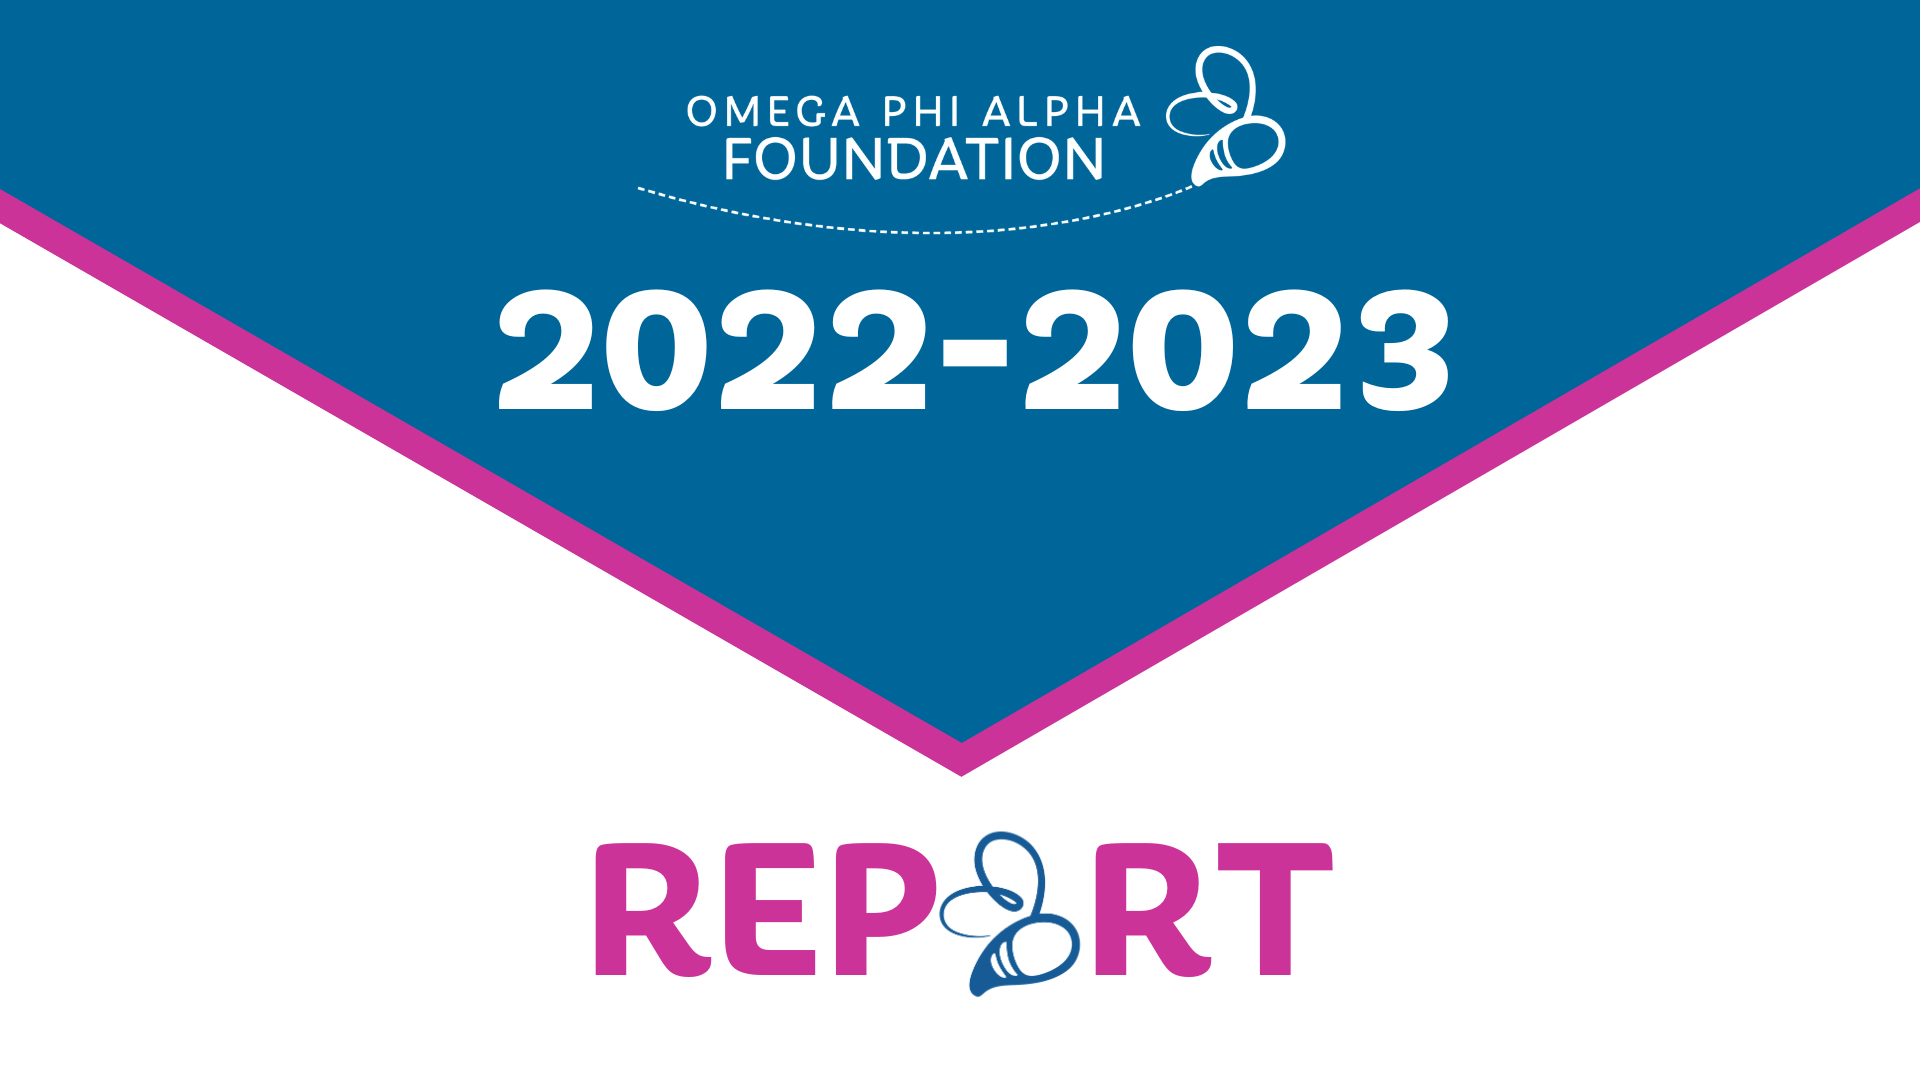 Omega Phi Alpha Foundation Annual Report